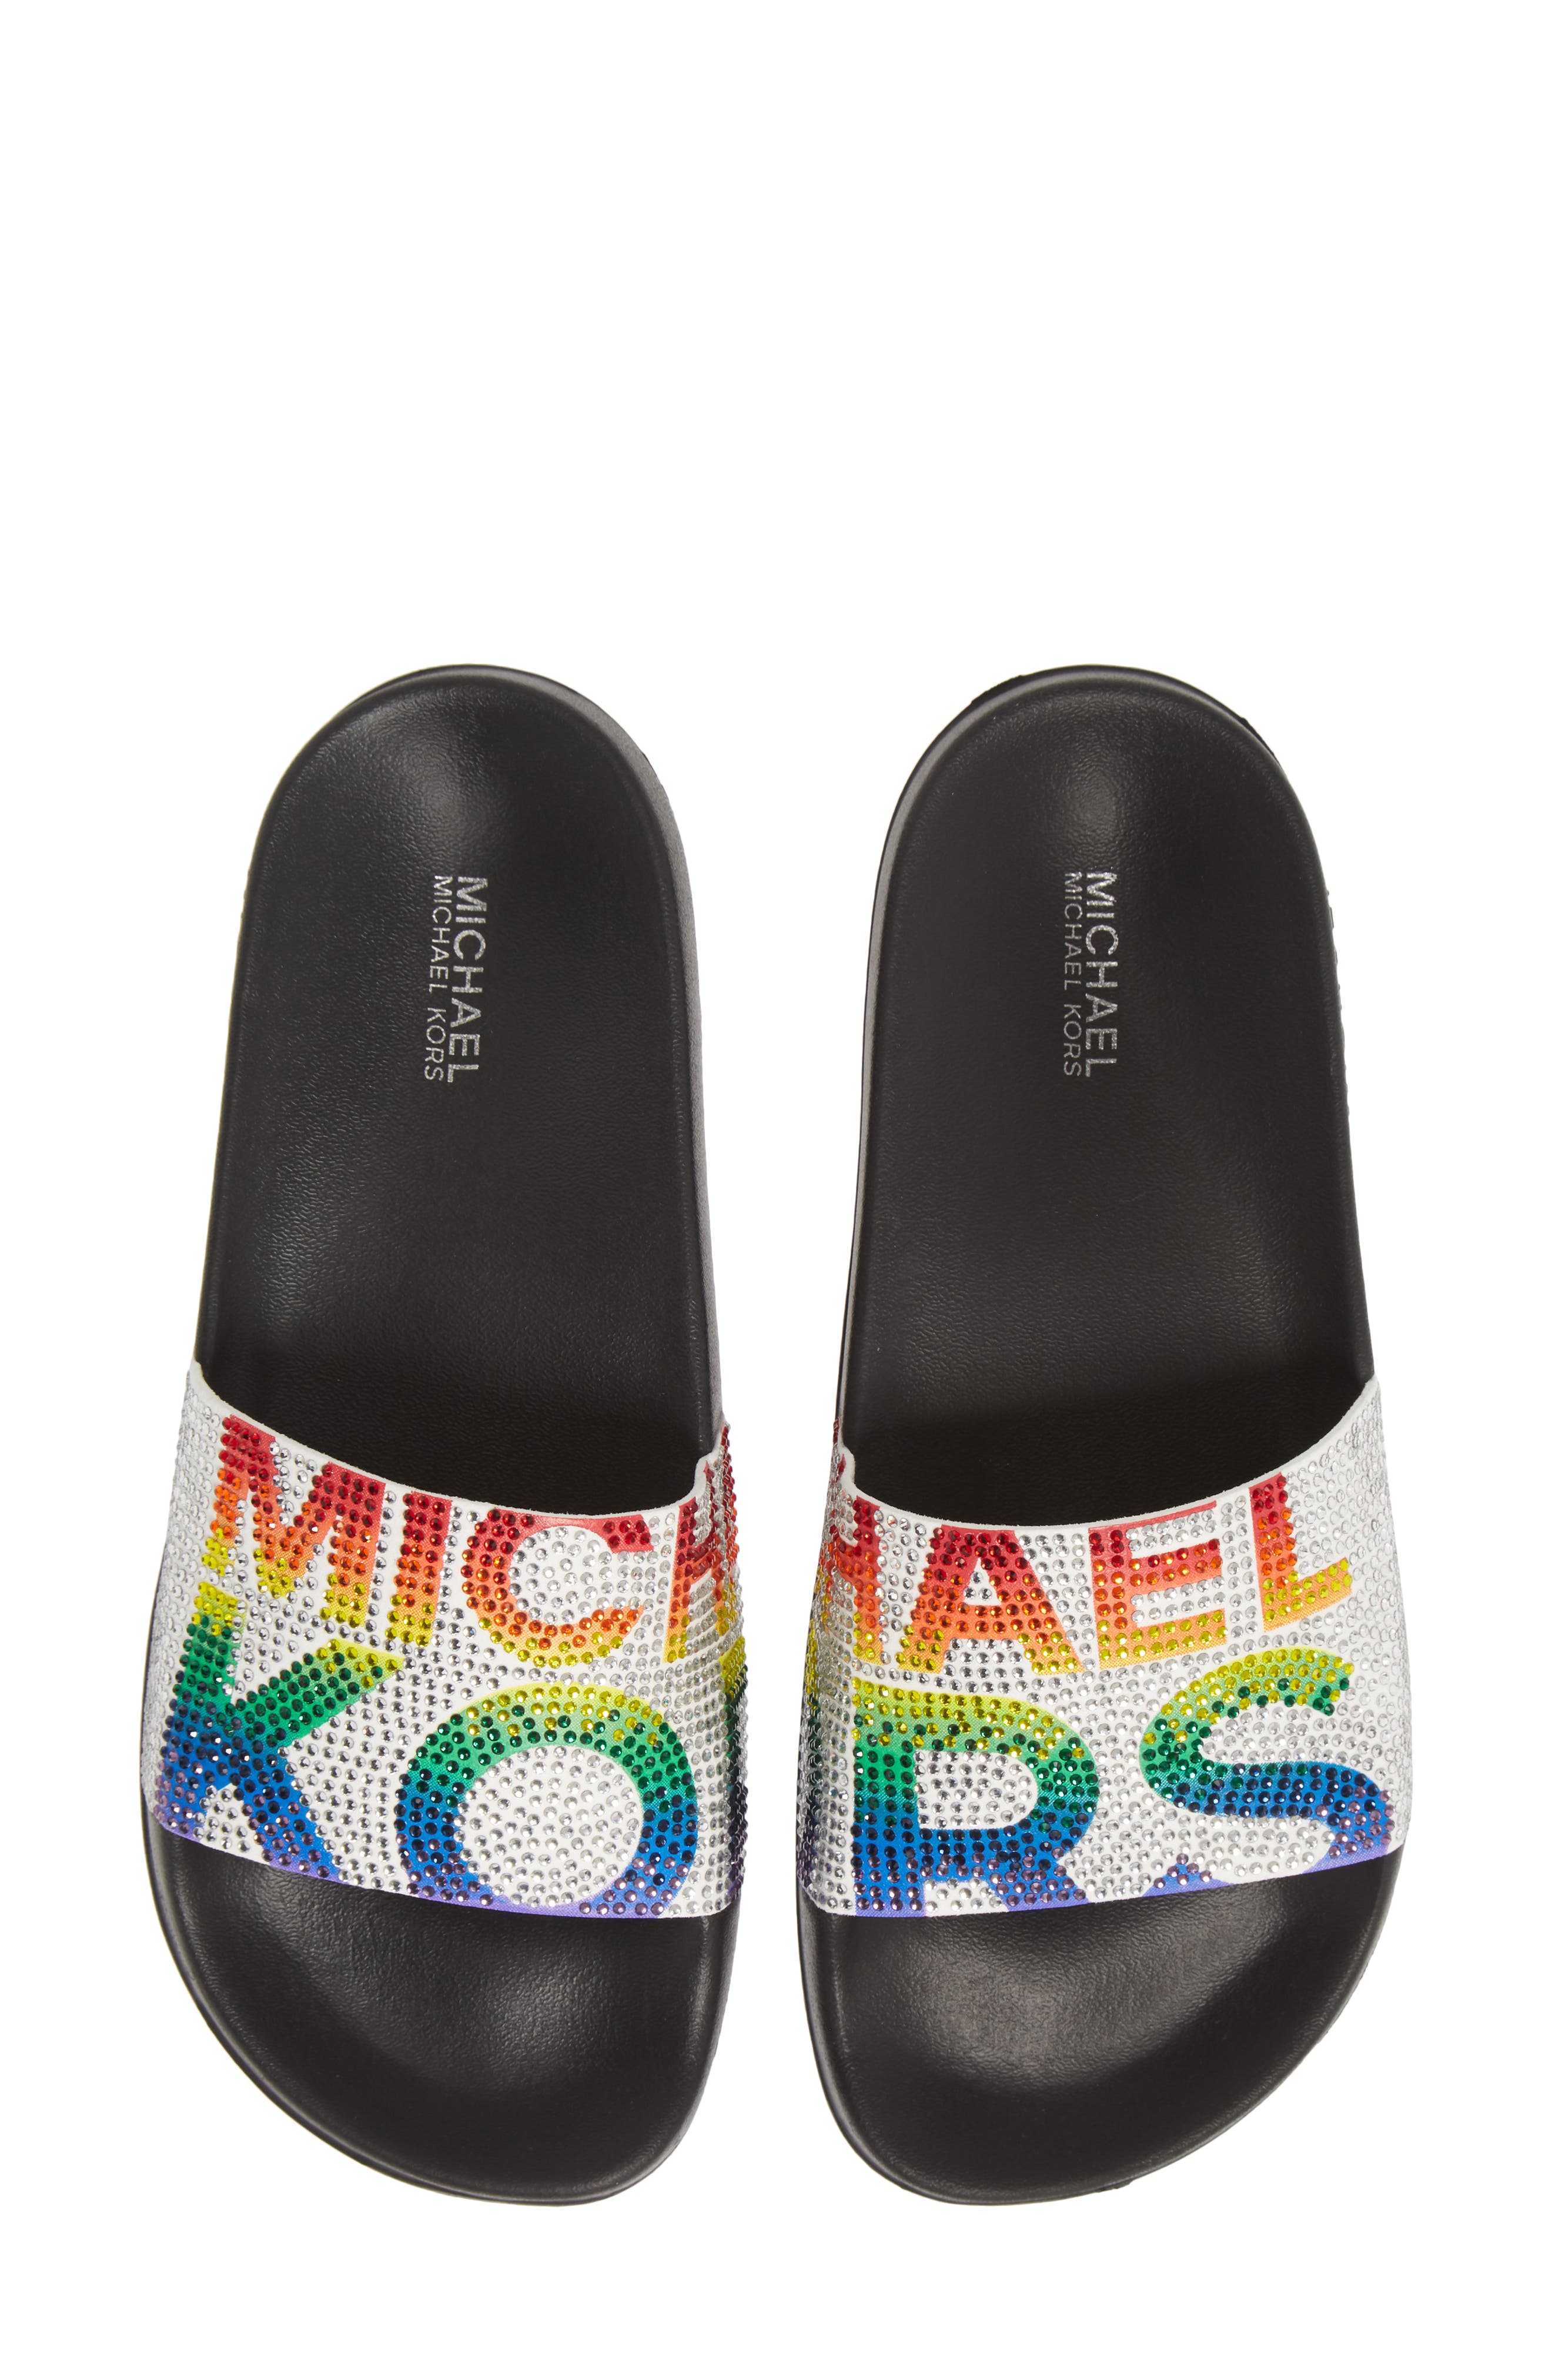 michael kors slippers sale